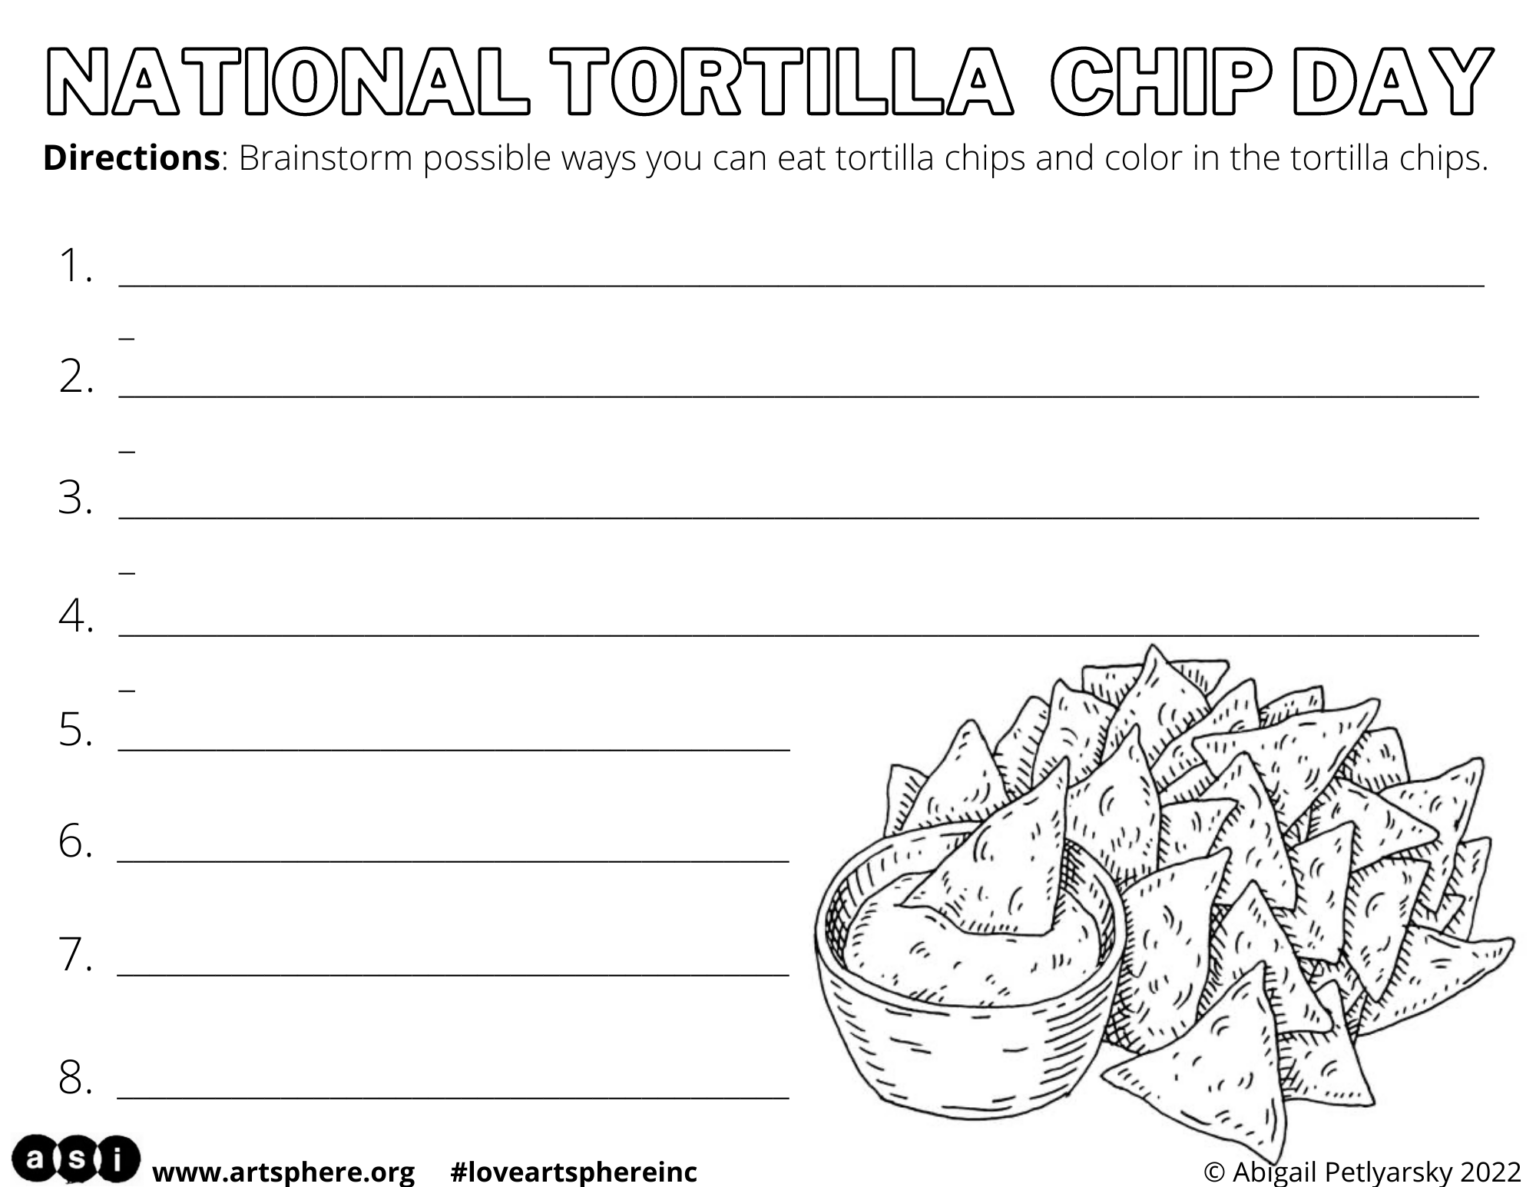 National Tortilla Chip Day Art Sphere Inc